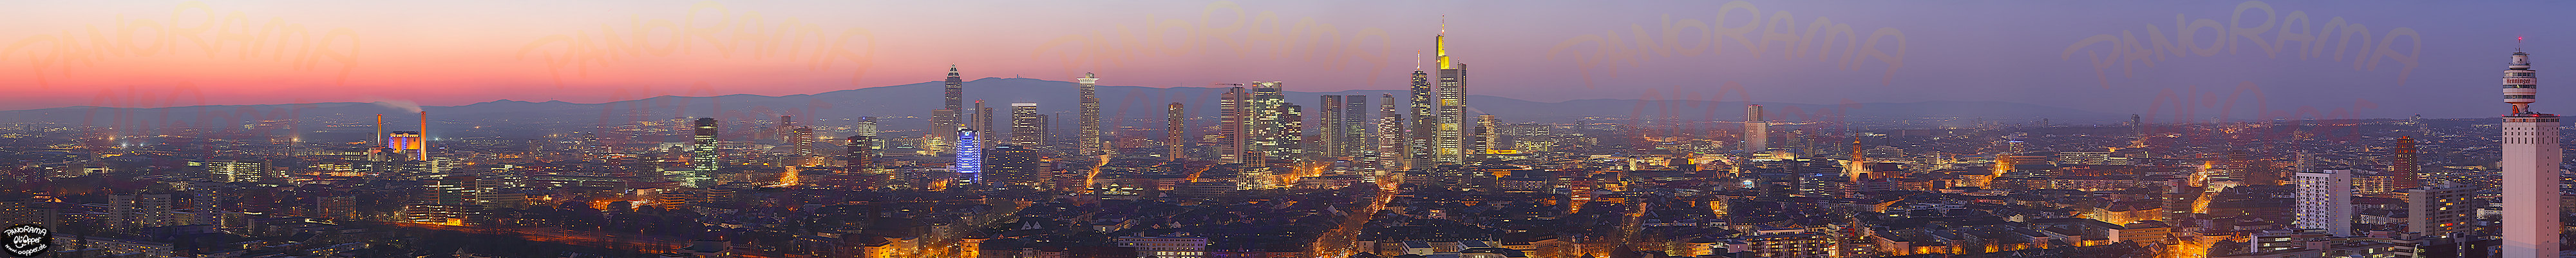 Frankfurt Skyline - p432 - (c) by Oliver Opper